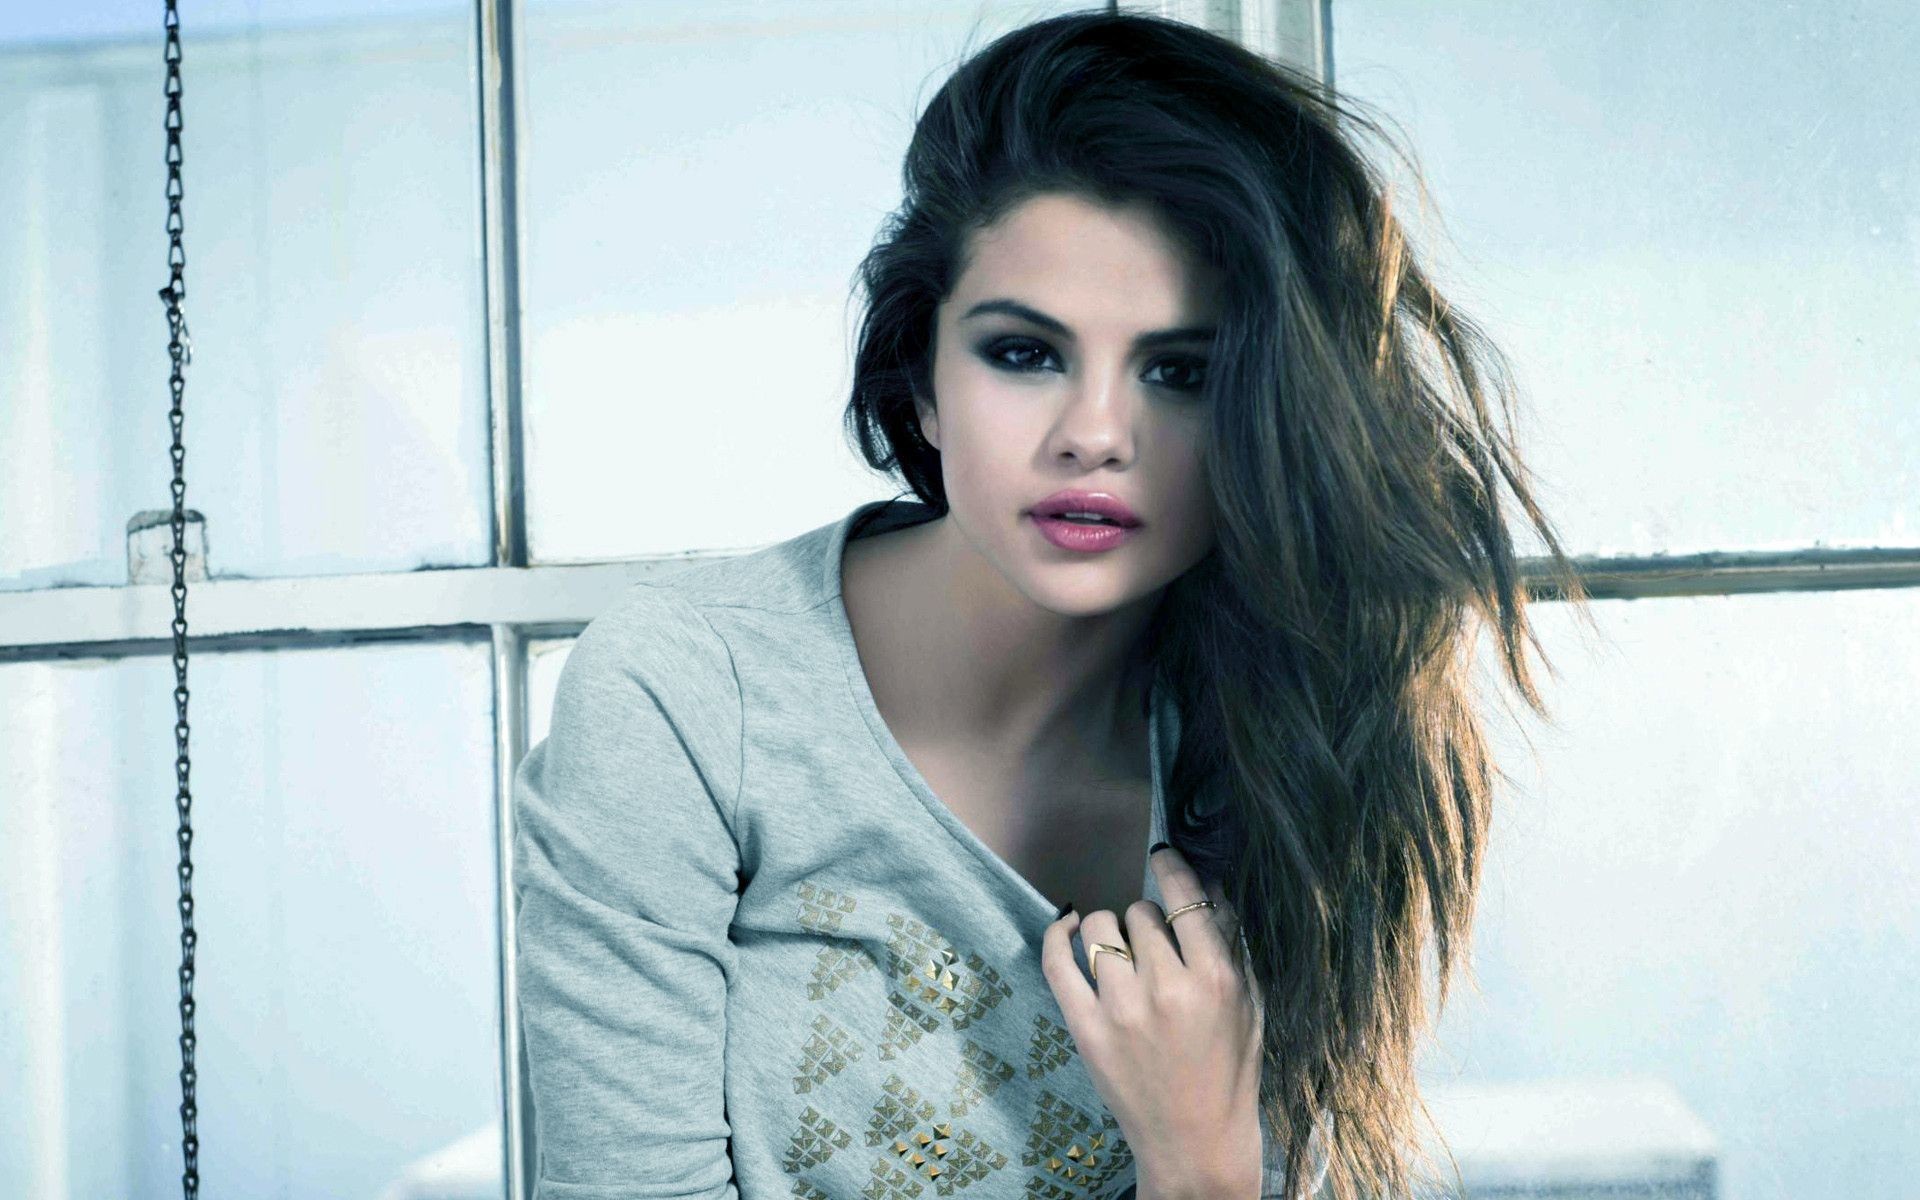 Selena Gomez HD Wallpaper 2018 the best 70 images in 2018